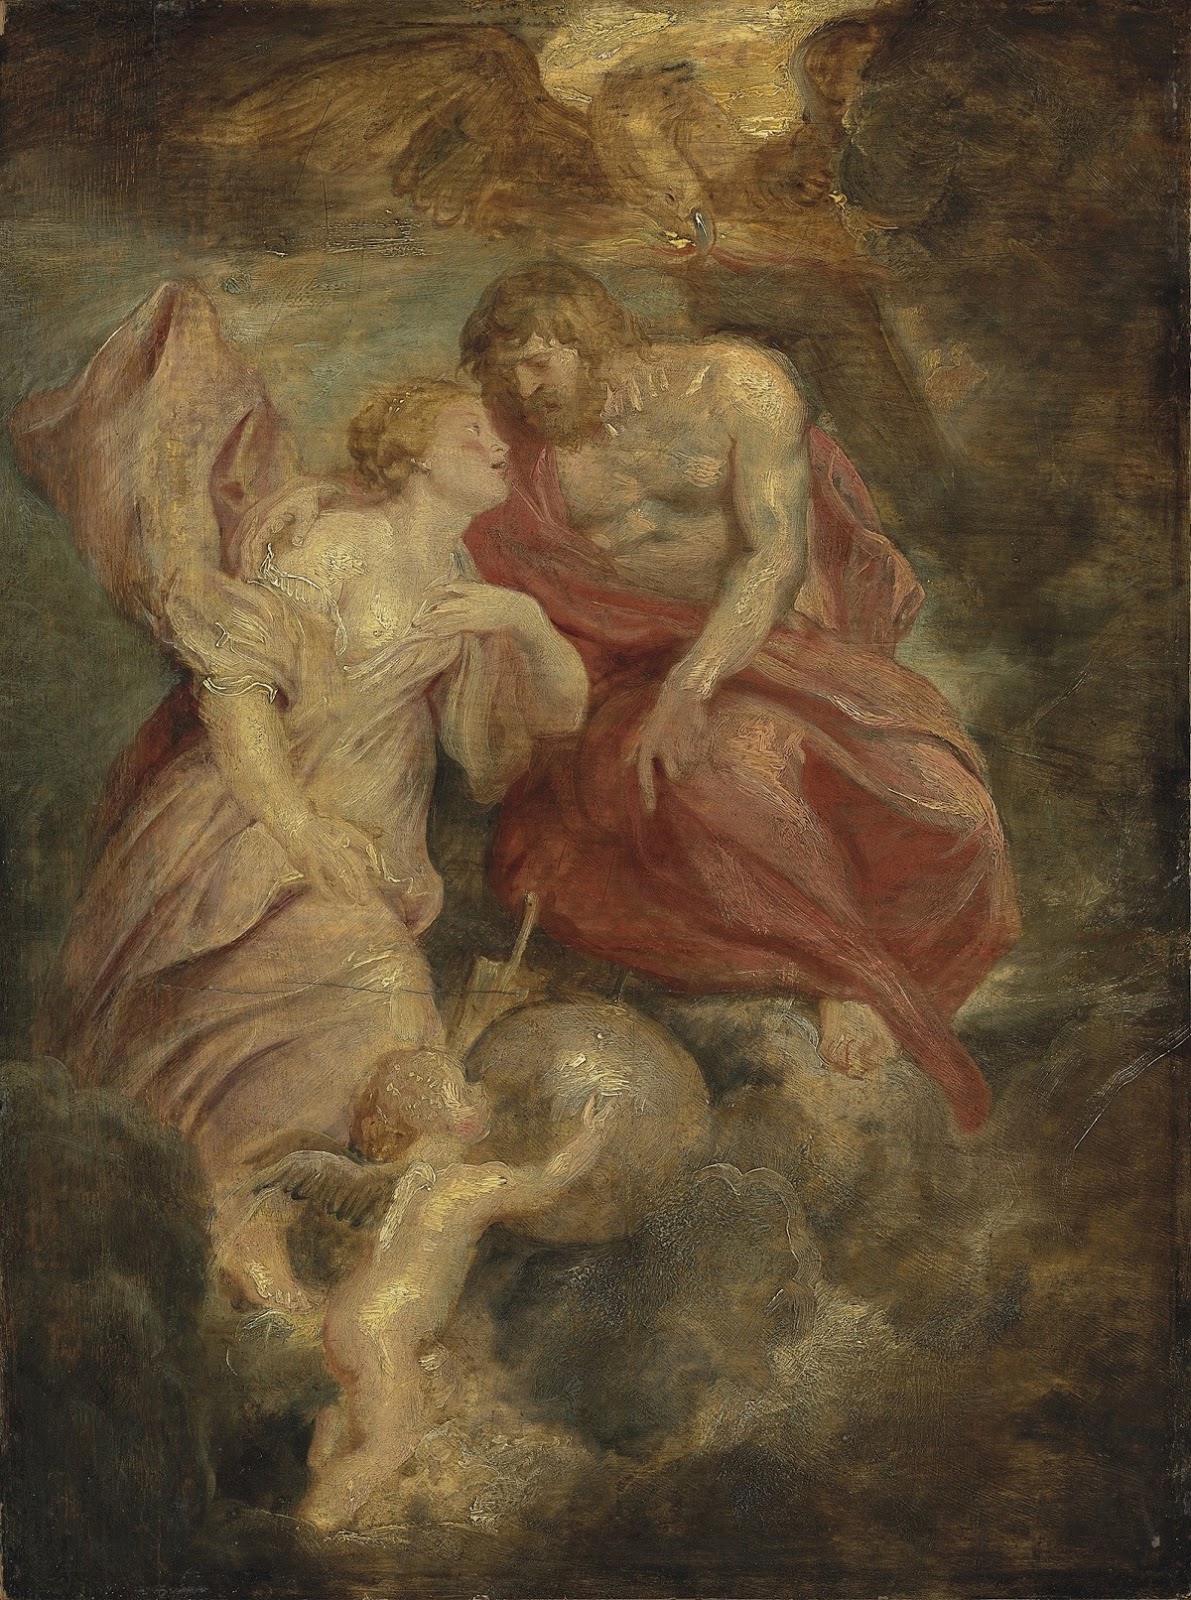 Peter+Paul+Rubens-1577-1640 (123).jpg